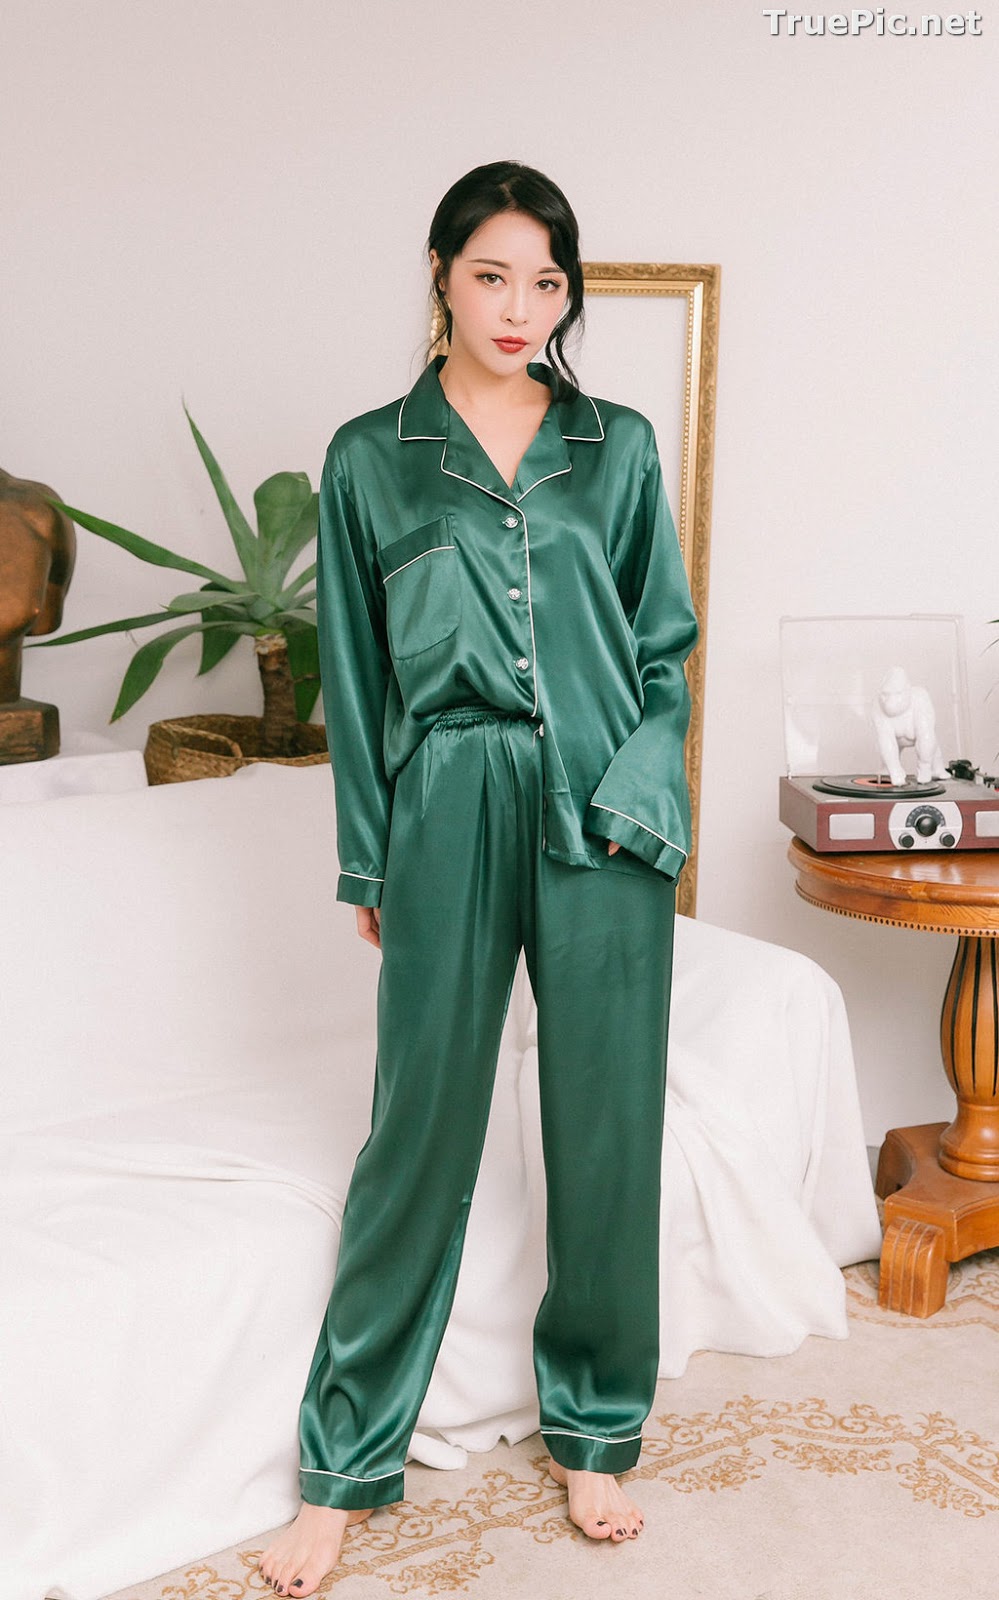 Image Ryu Hyeonju - Korean Fashion Model - Pijama and Lingerie Set - TruePic.net - Picture-14